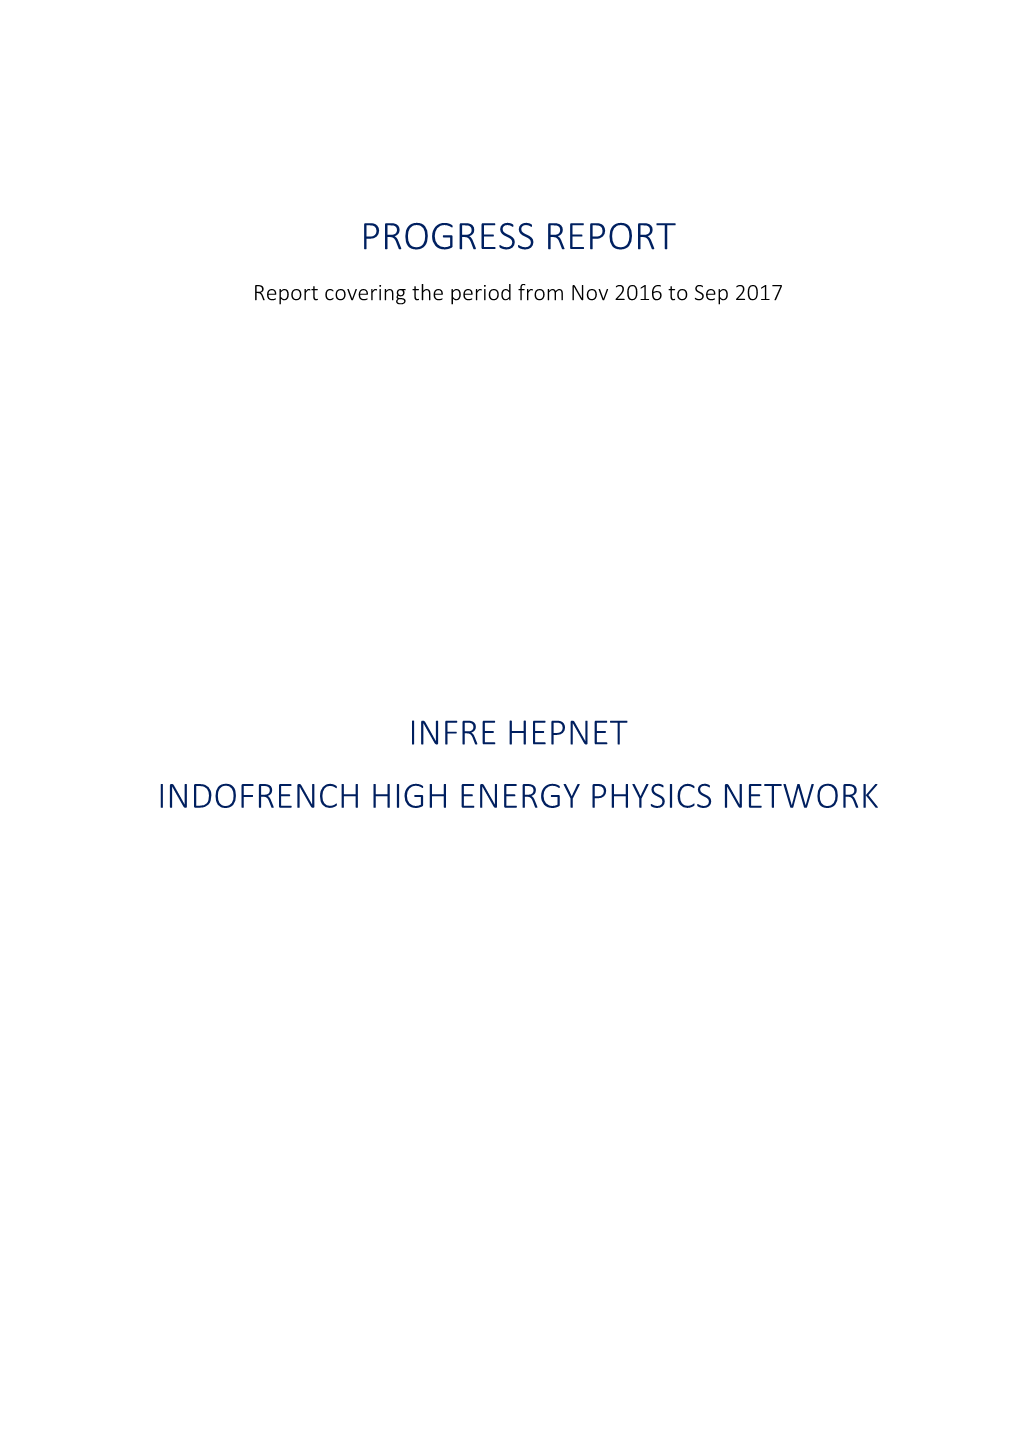 2017 Progress Report